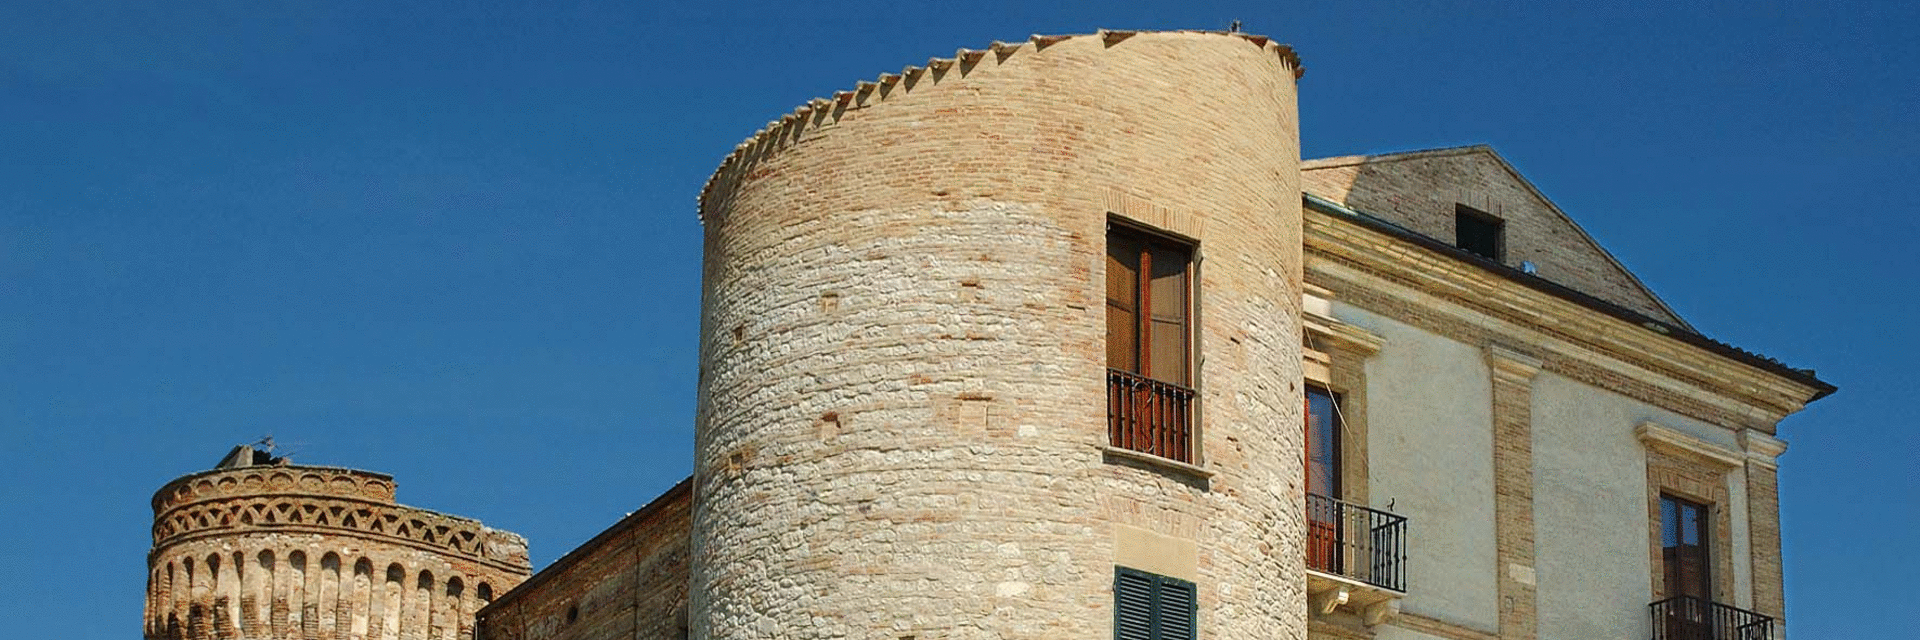 Castello di Monteodorisio